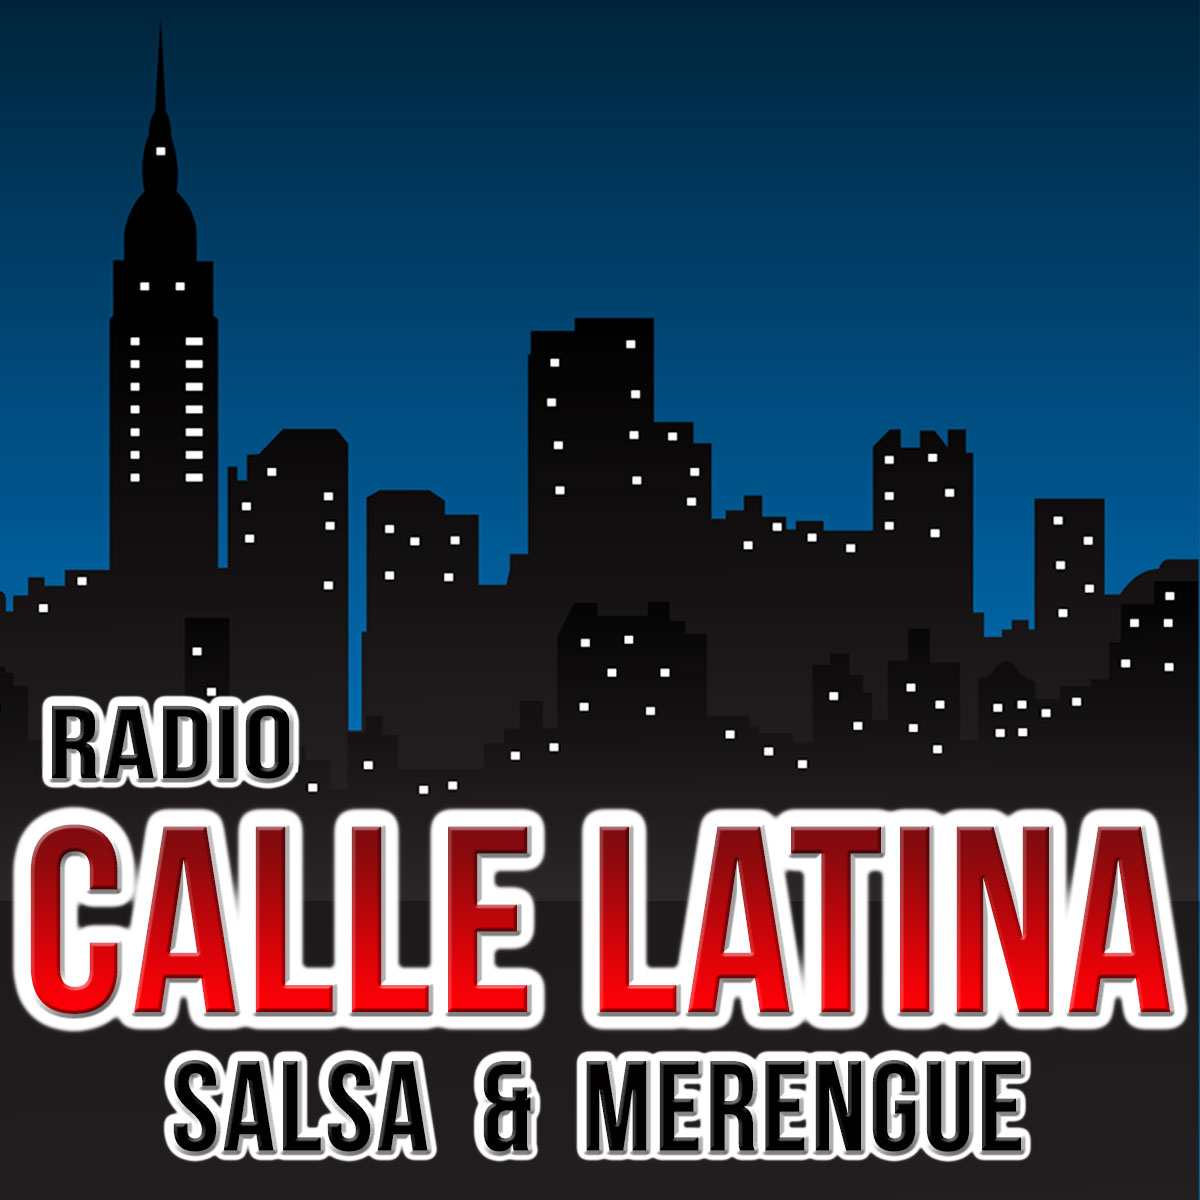 Free Latin Radio Stations Online 45